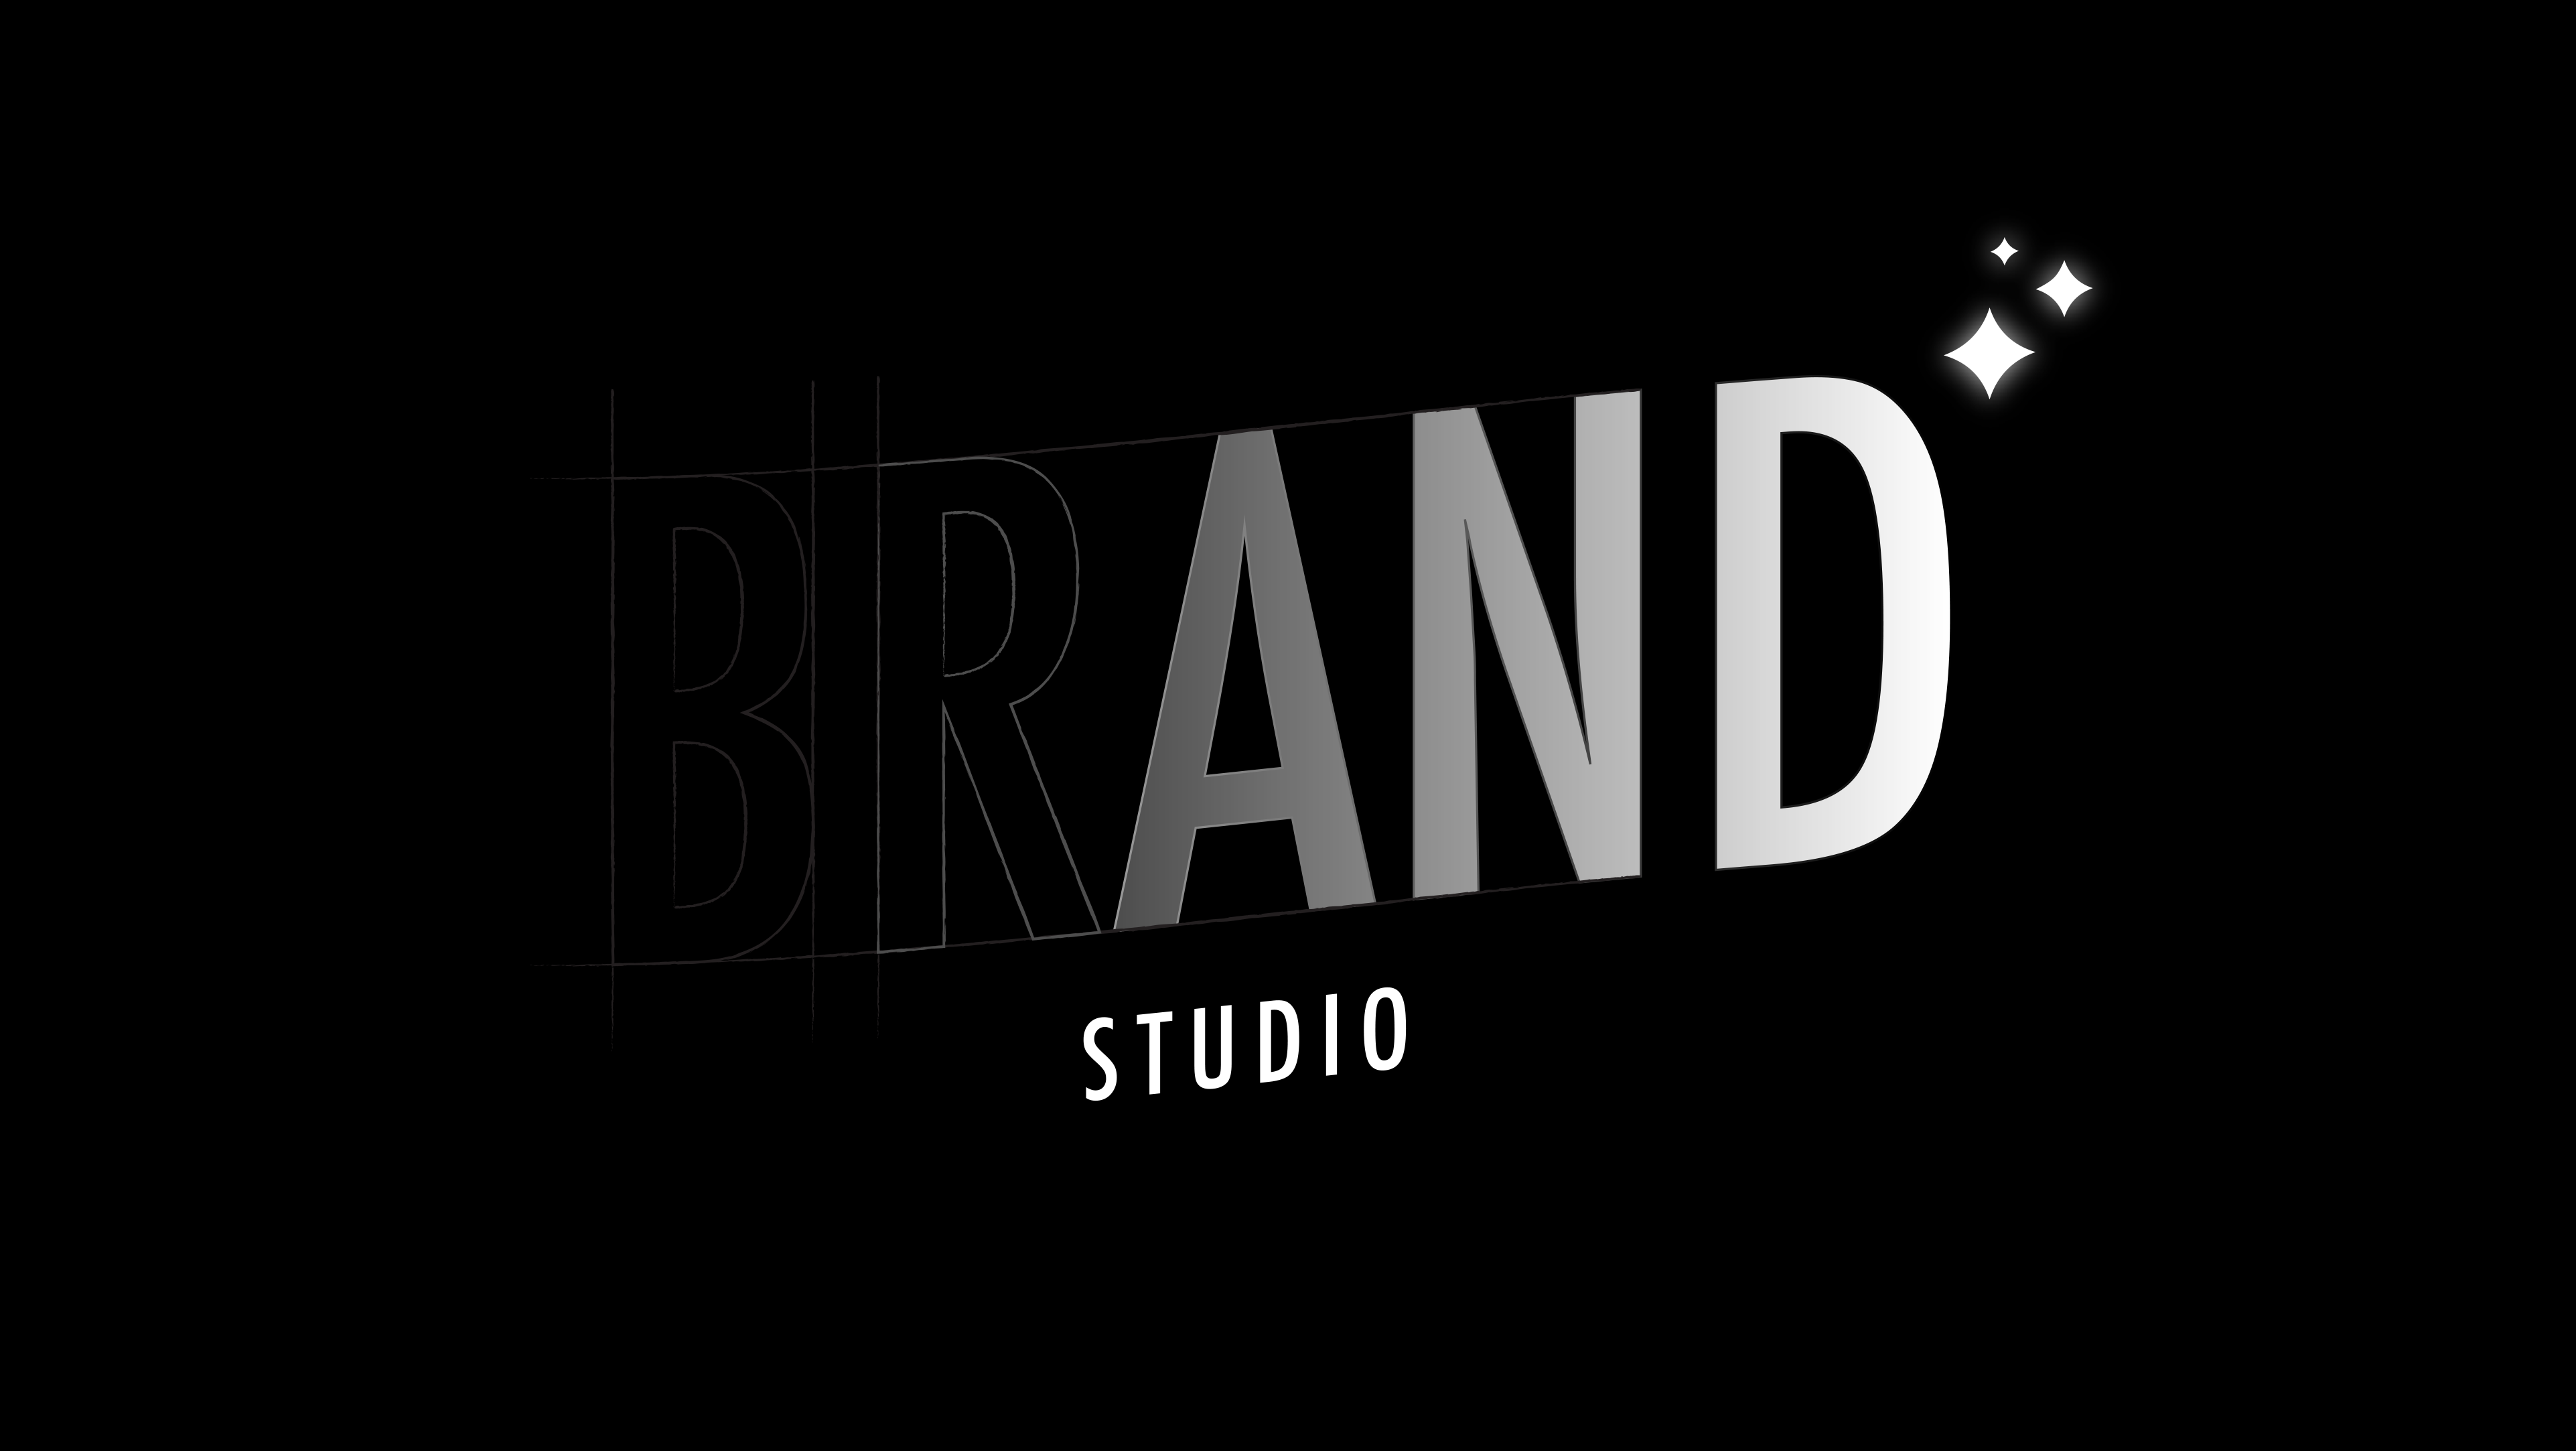 Brand Visual: A New Day Studio